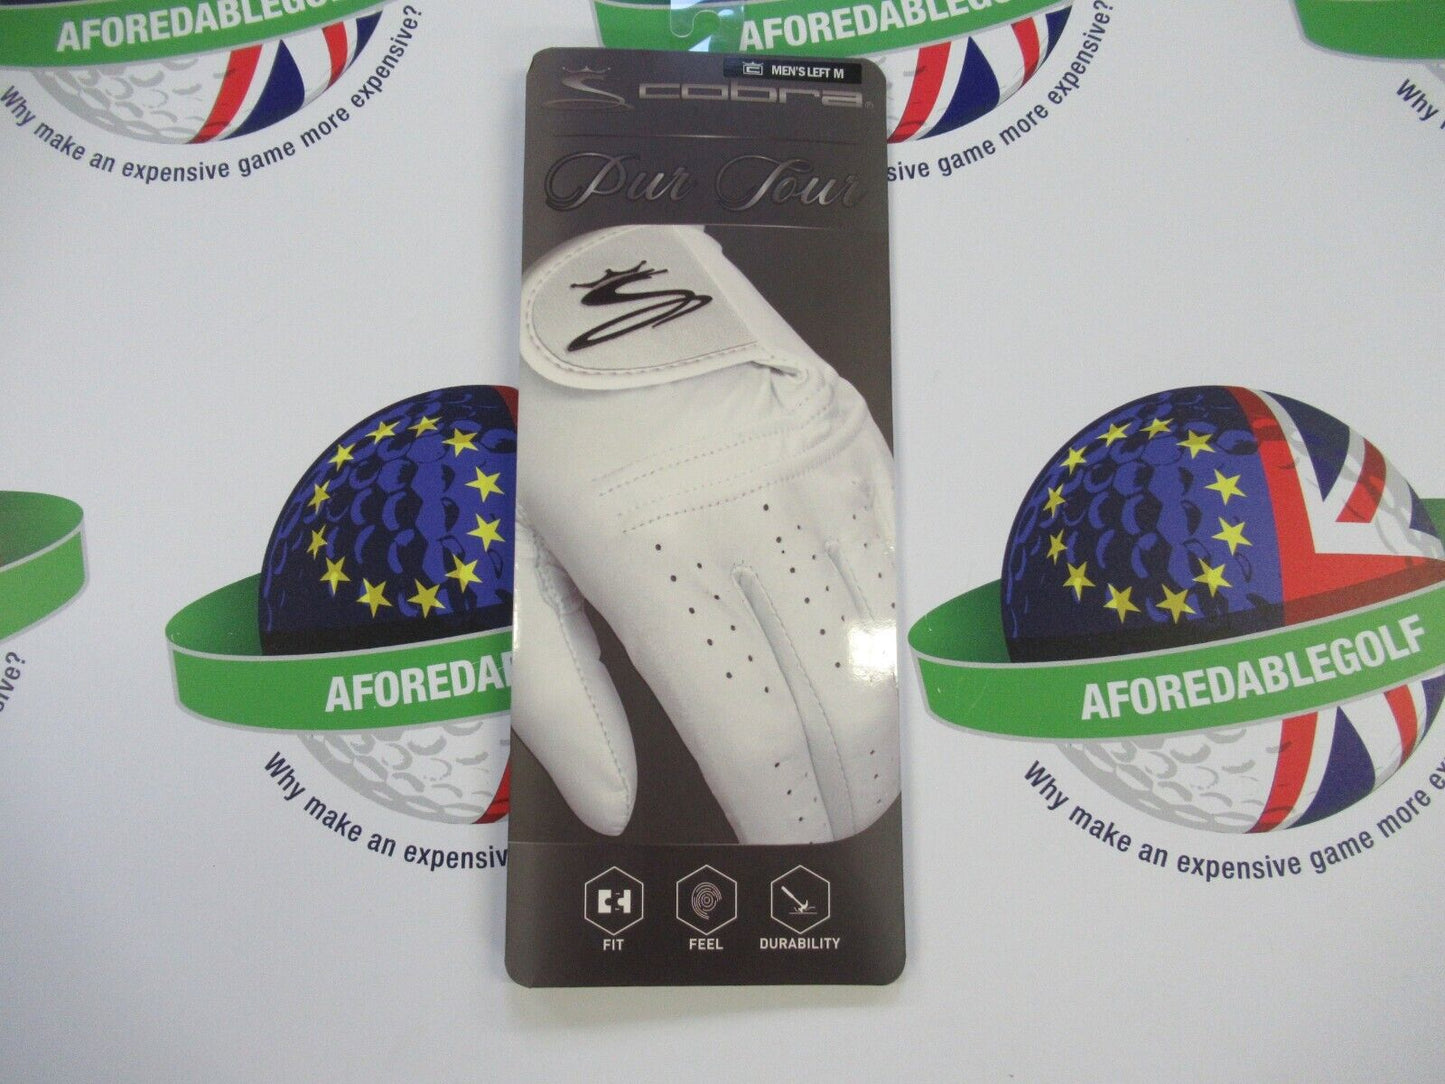 cobra pur tour cabretta leather left hand golf glove size medium